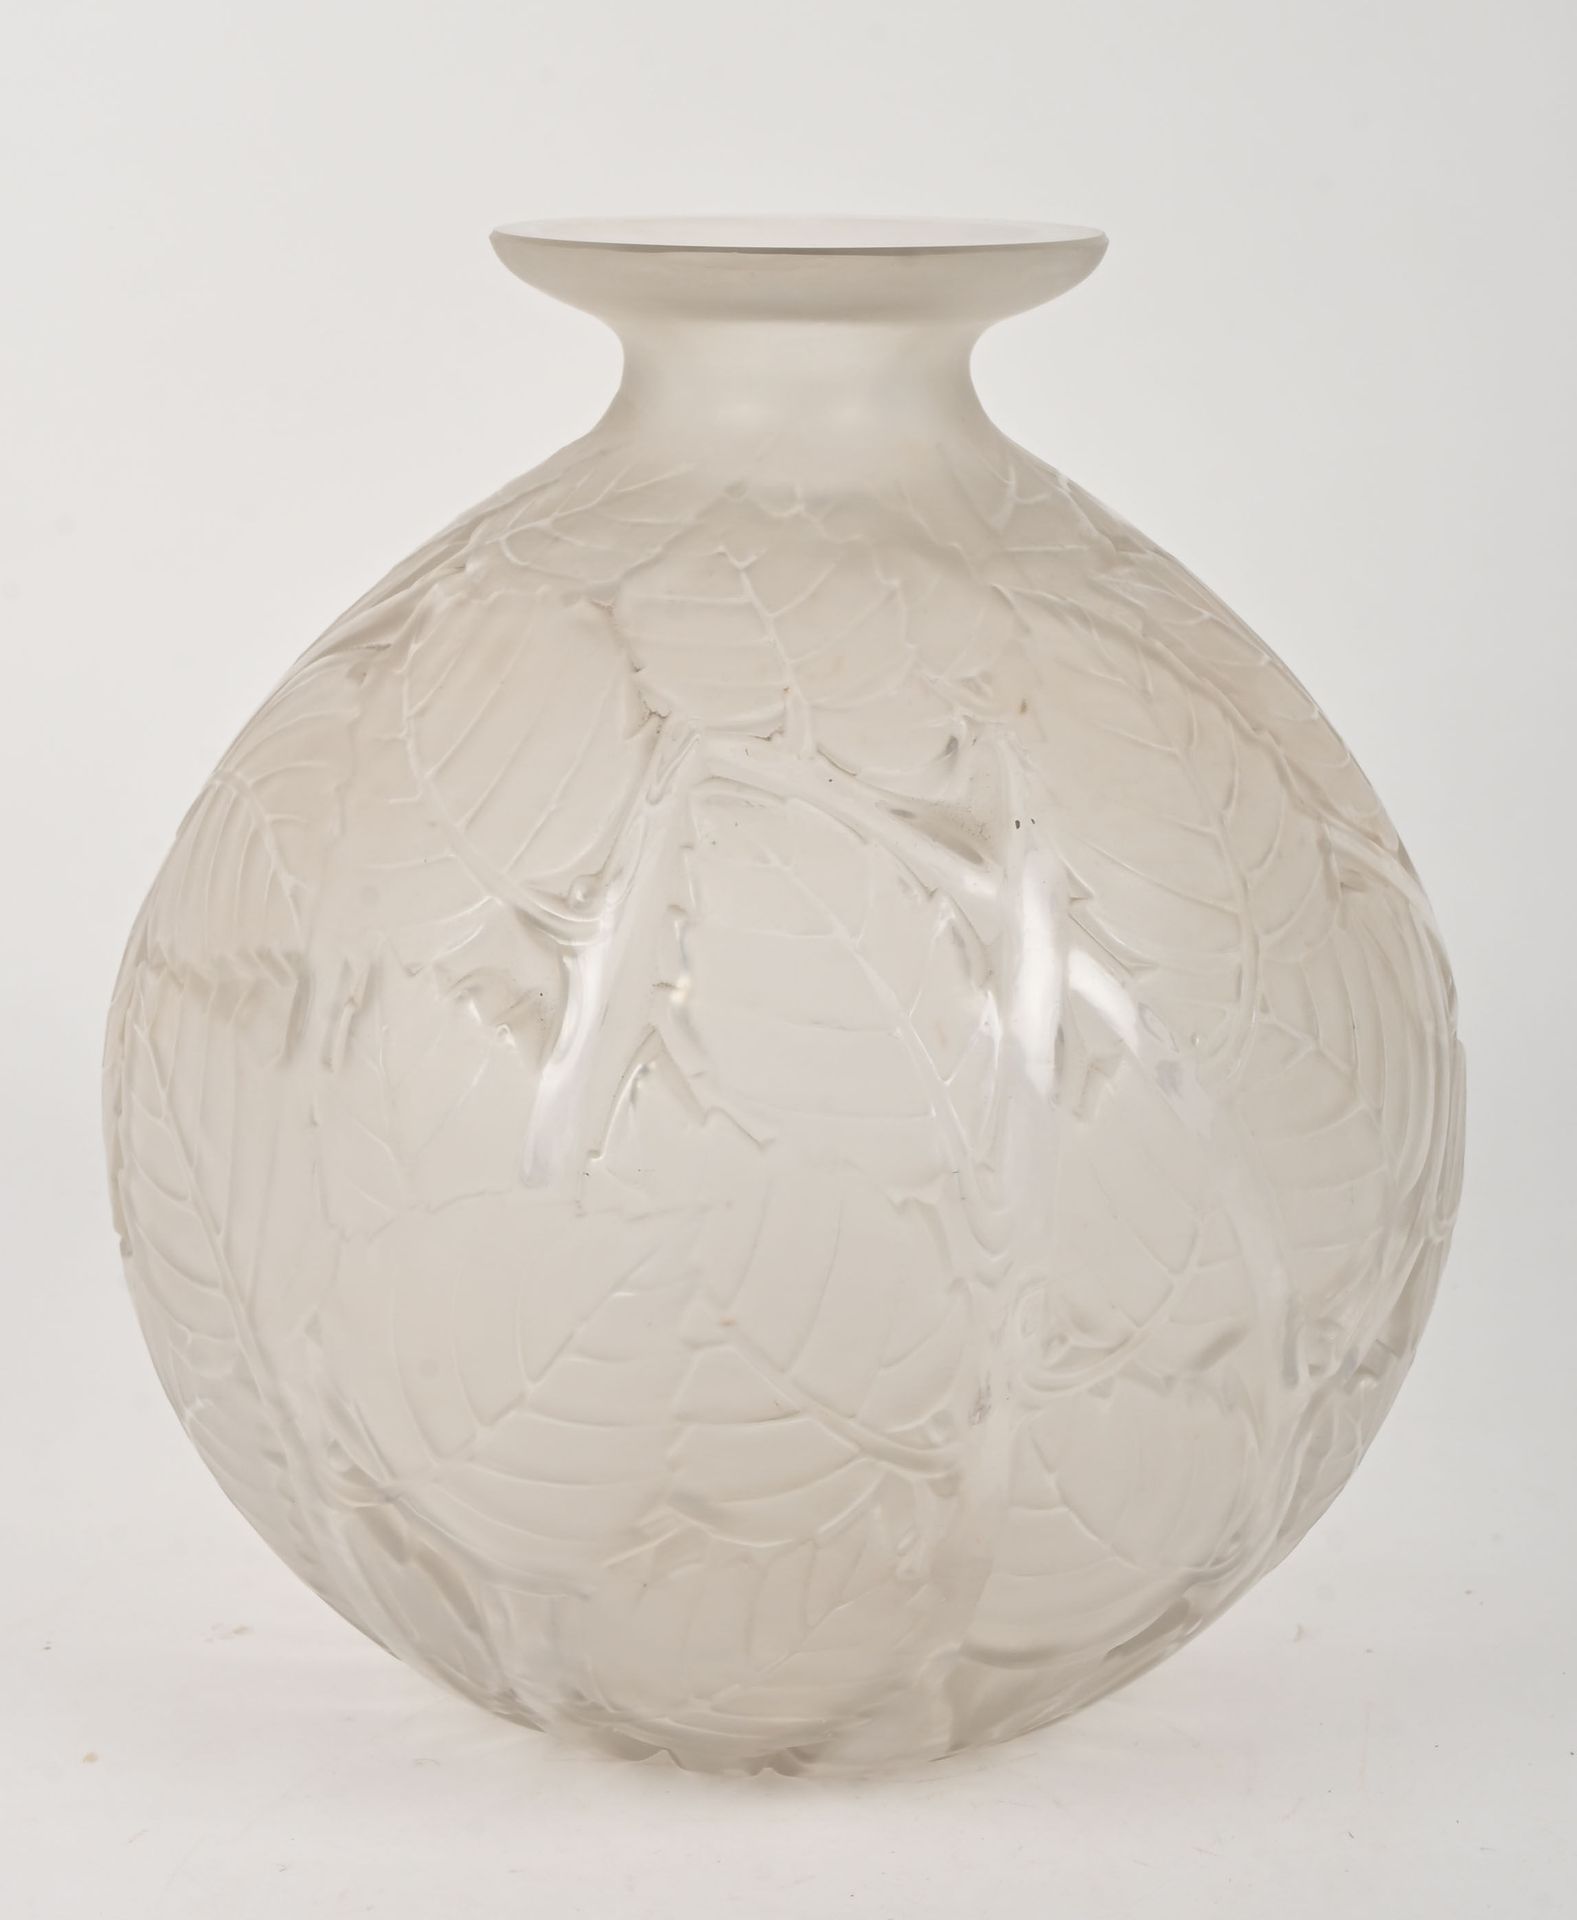 Null LALIQUE
一个Lalique的花瓶，球状瓶身和小颈部的模制水晶，部分经过缎面处理，有棱角的叶子。签名：R. Lalique。 
H.30厘米。